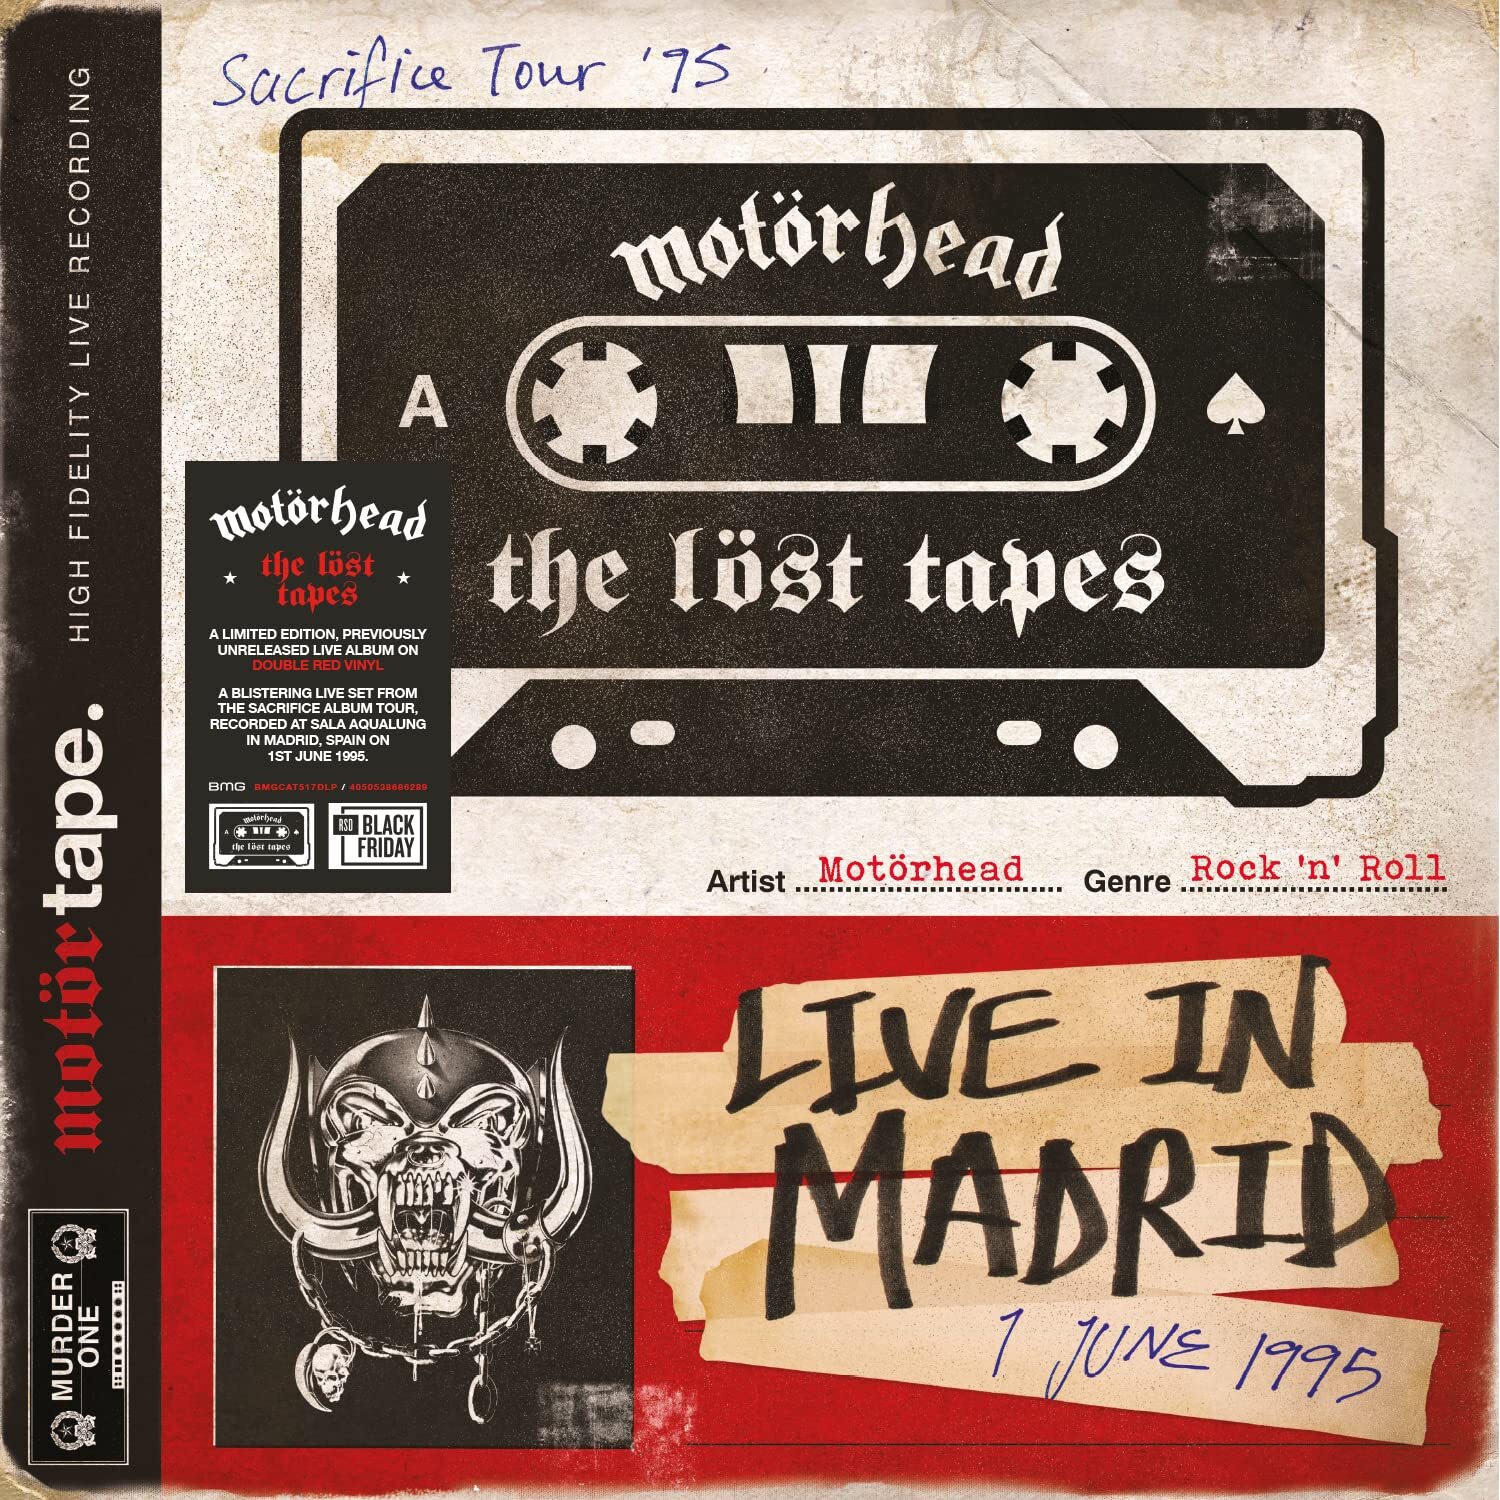 Рок Warner Music Motorhead - The Lost Tapes Vol. 1 Live In Madrid 1 June 1995 (Limited Edition Coloured Vinyl 2LP) хип хоп warner music the notorious b i g life after death coloured vinyl 3lp